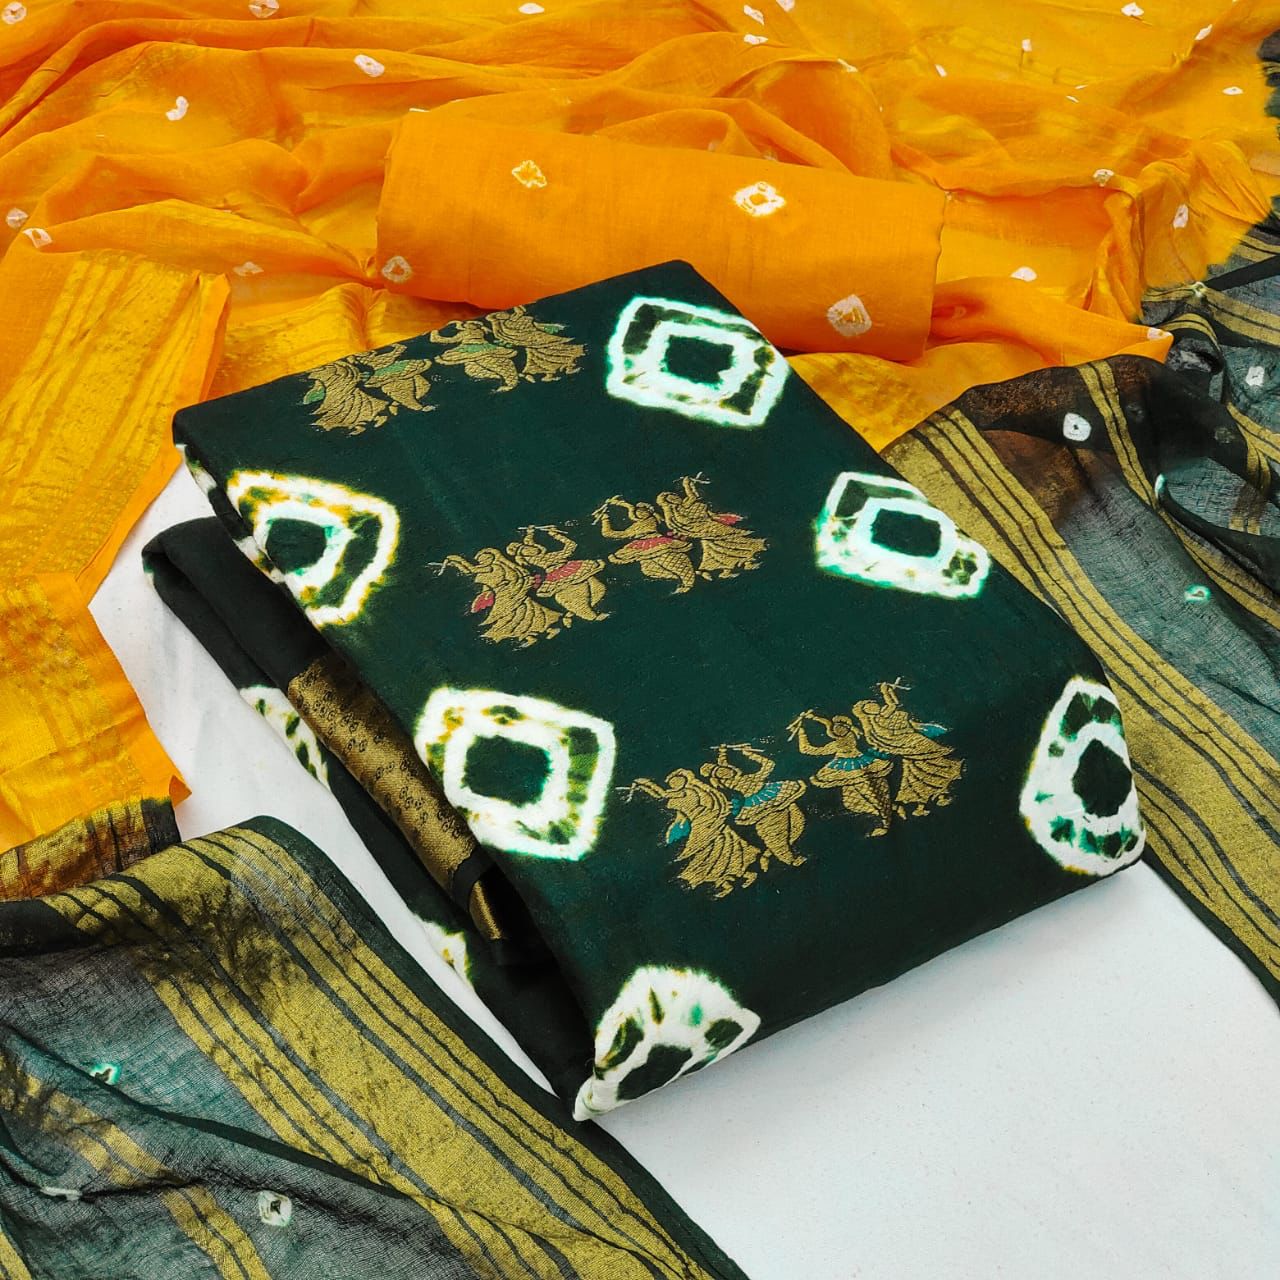 Cotton Golden Embroidery Bandhani Material (Unstitched) Ethenika.com 